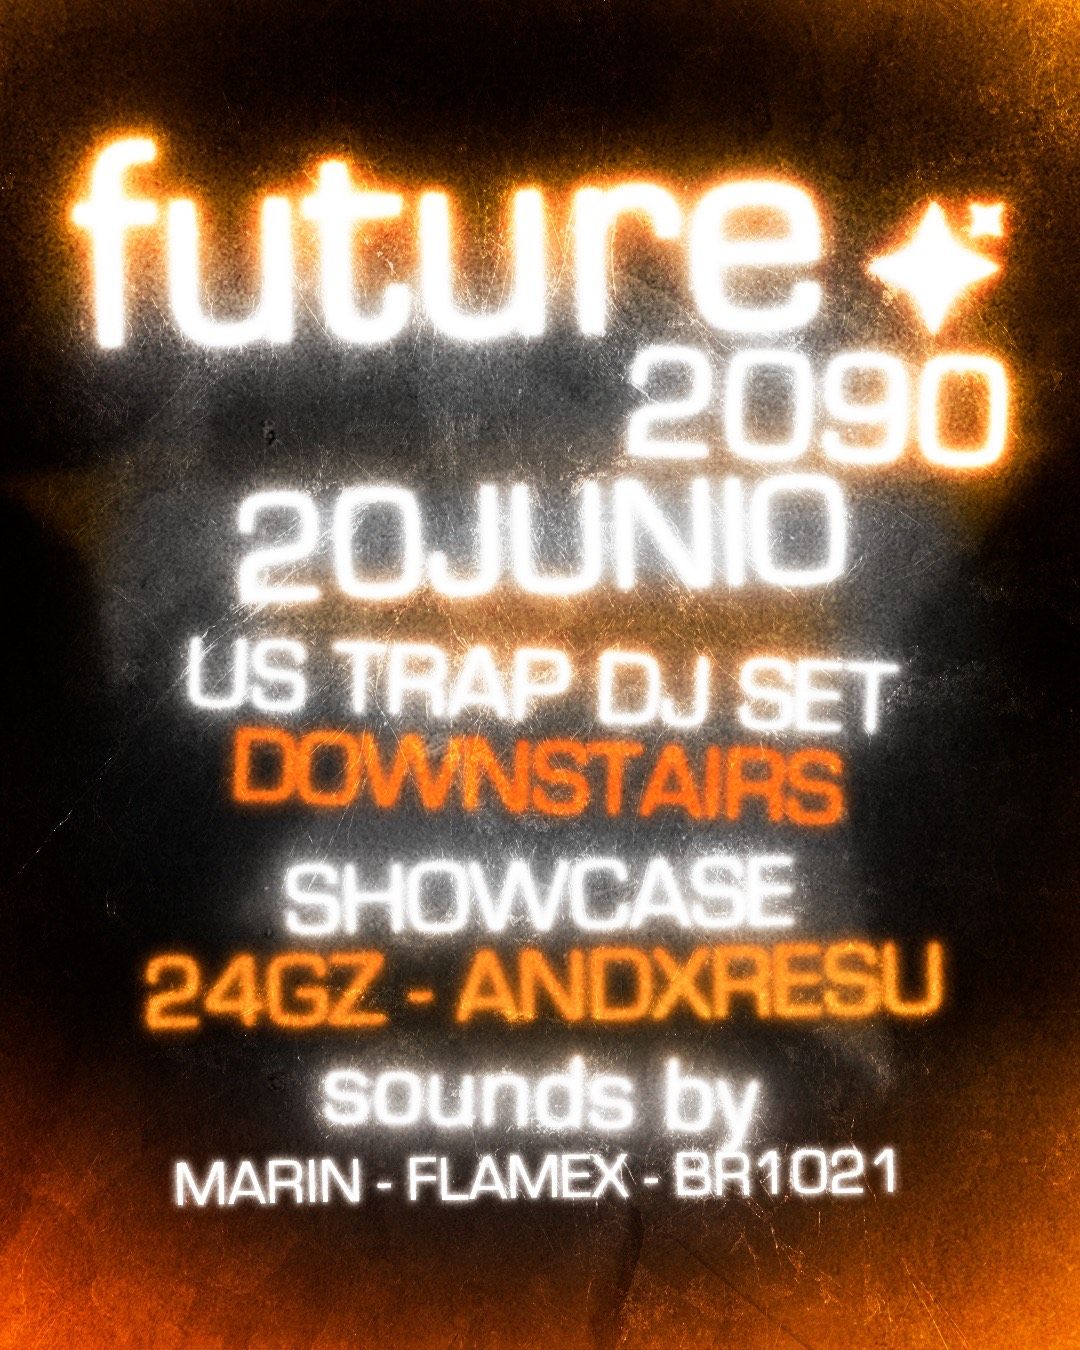 Future2090: Marin